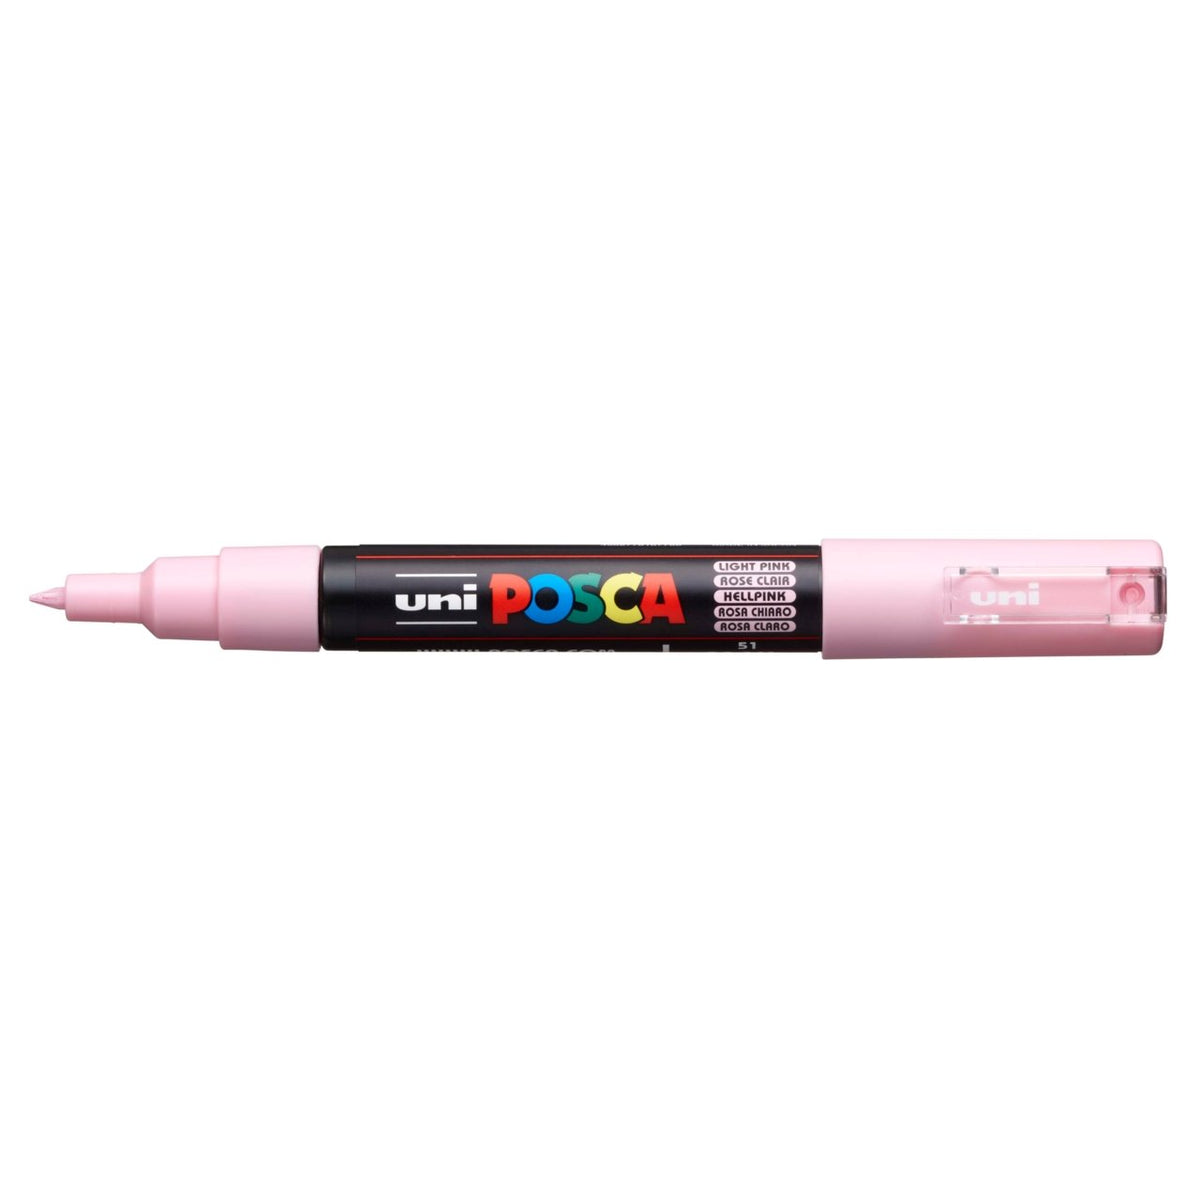 POSCA Marker Soft Color Pastels Review 